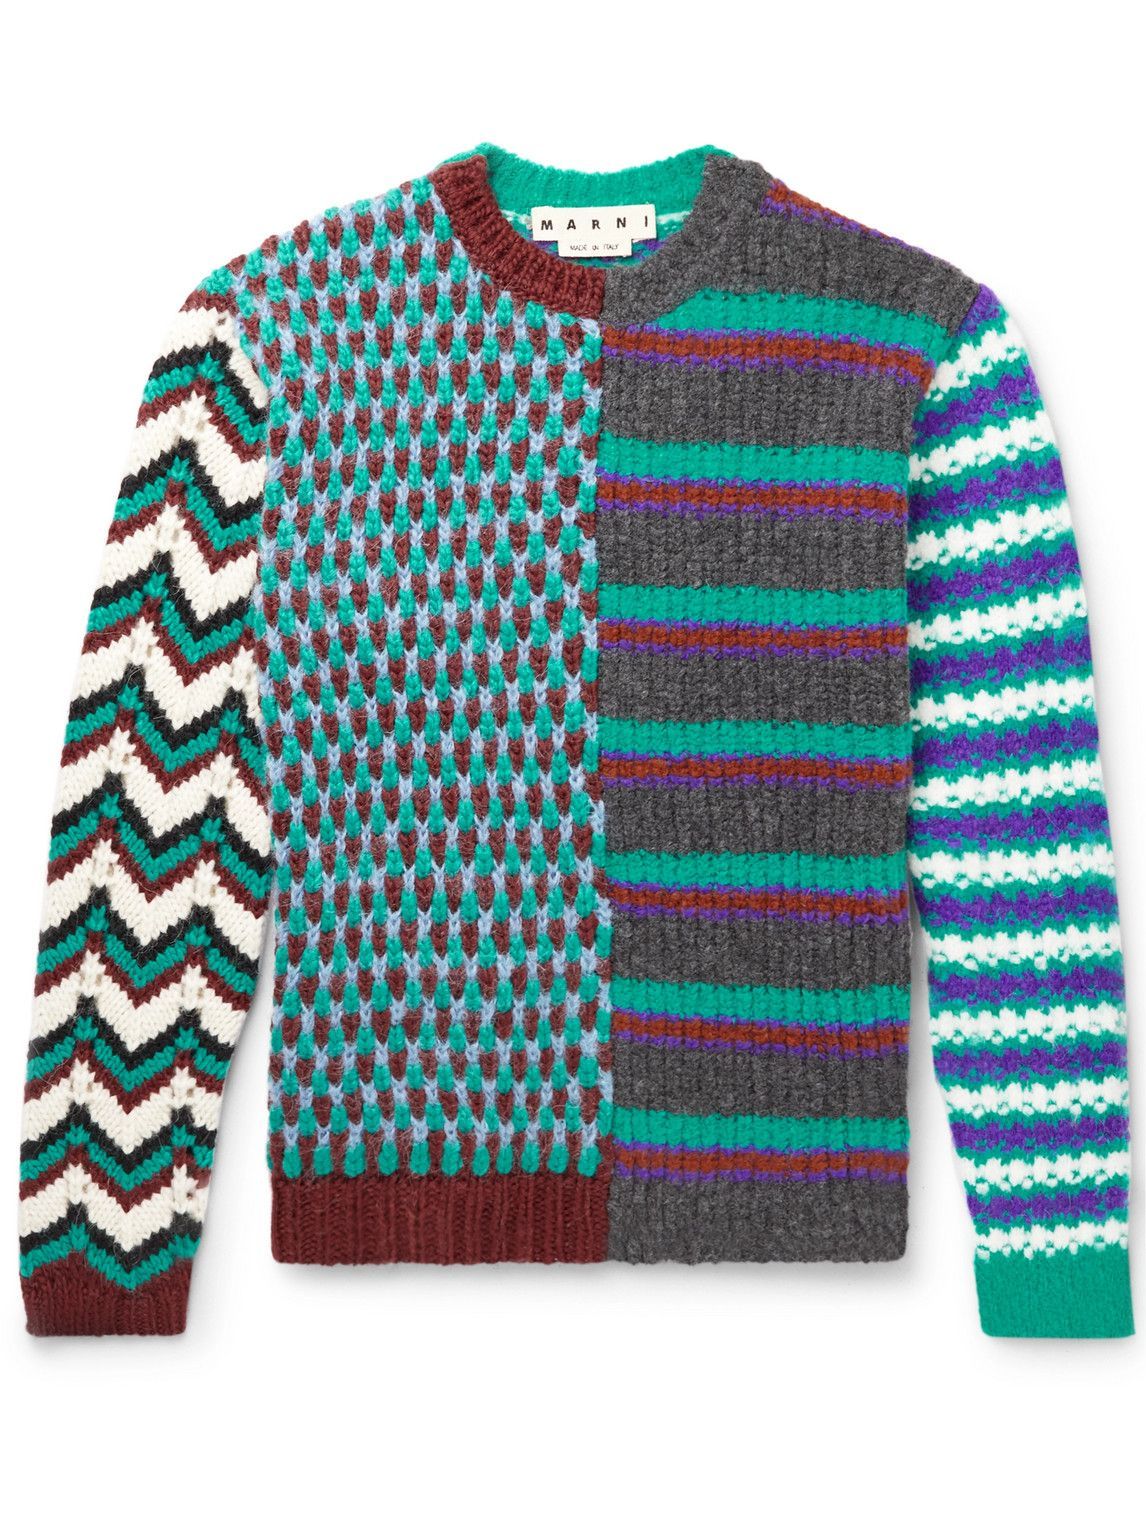 Marni - Striped Intarsia-Knit Sweater - Green Marni